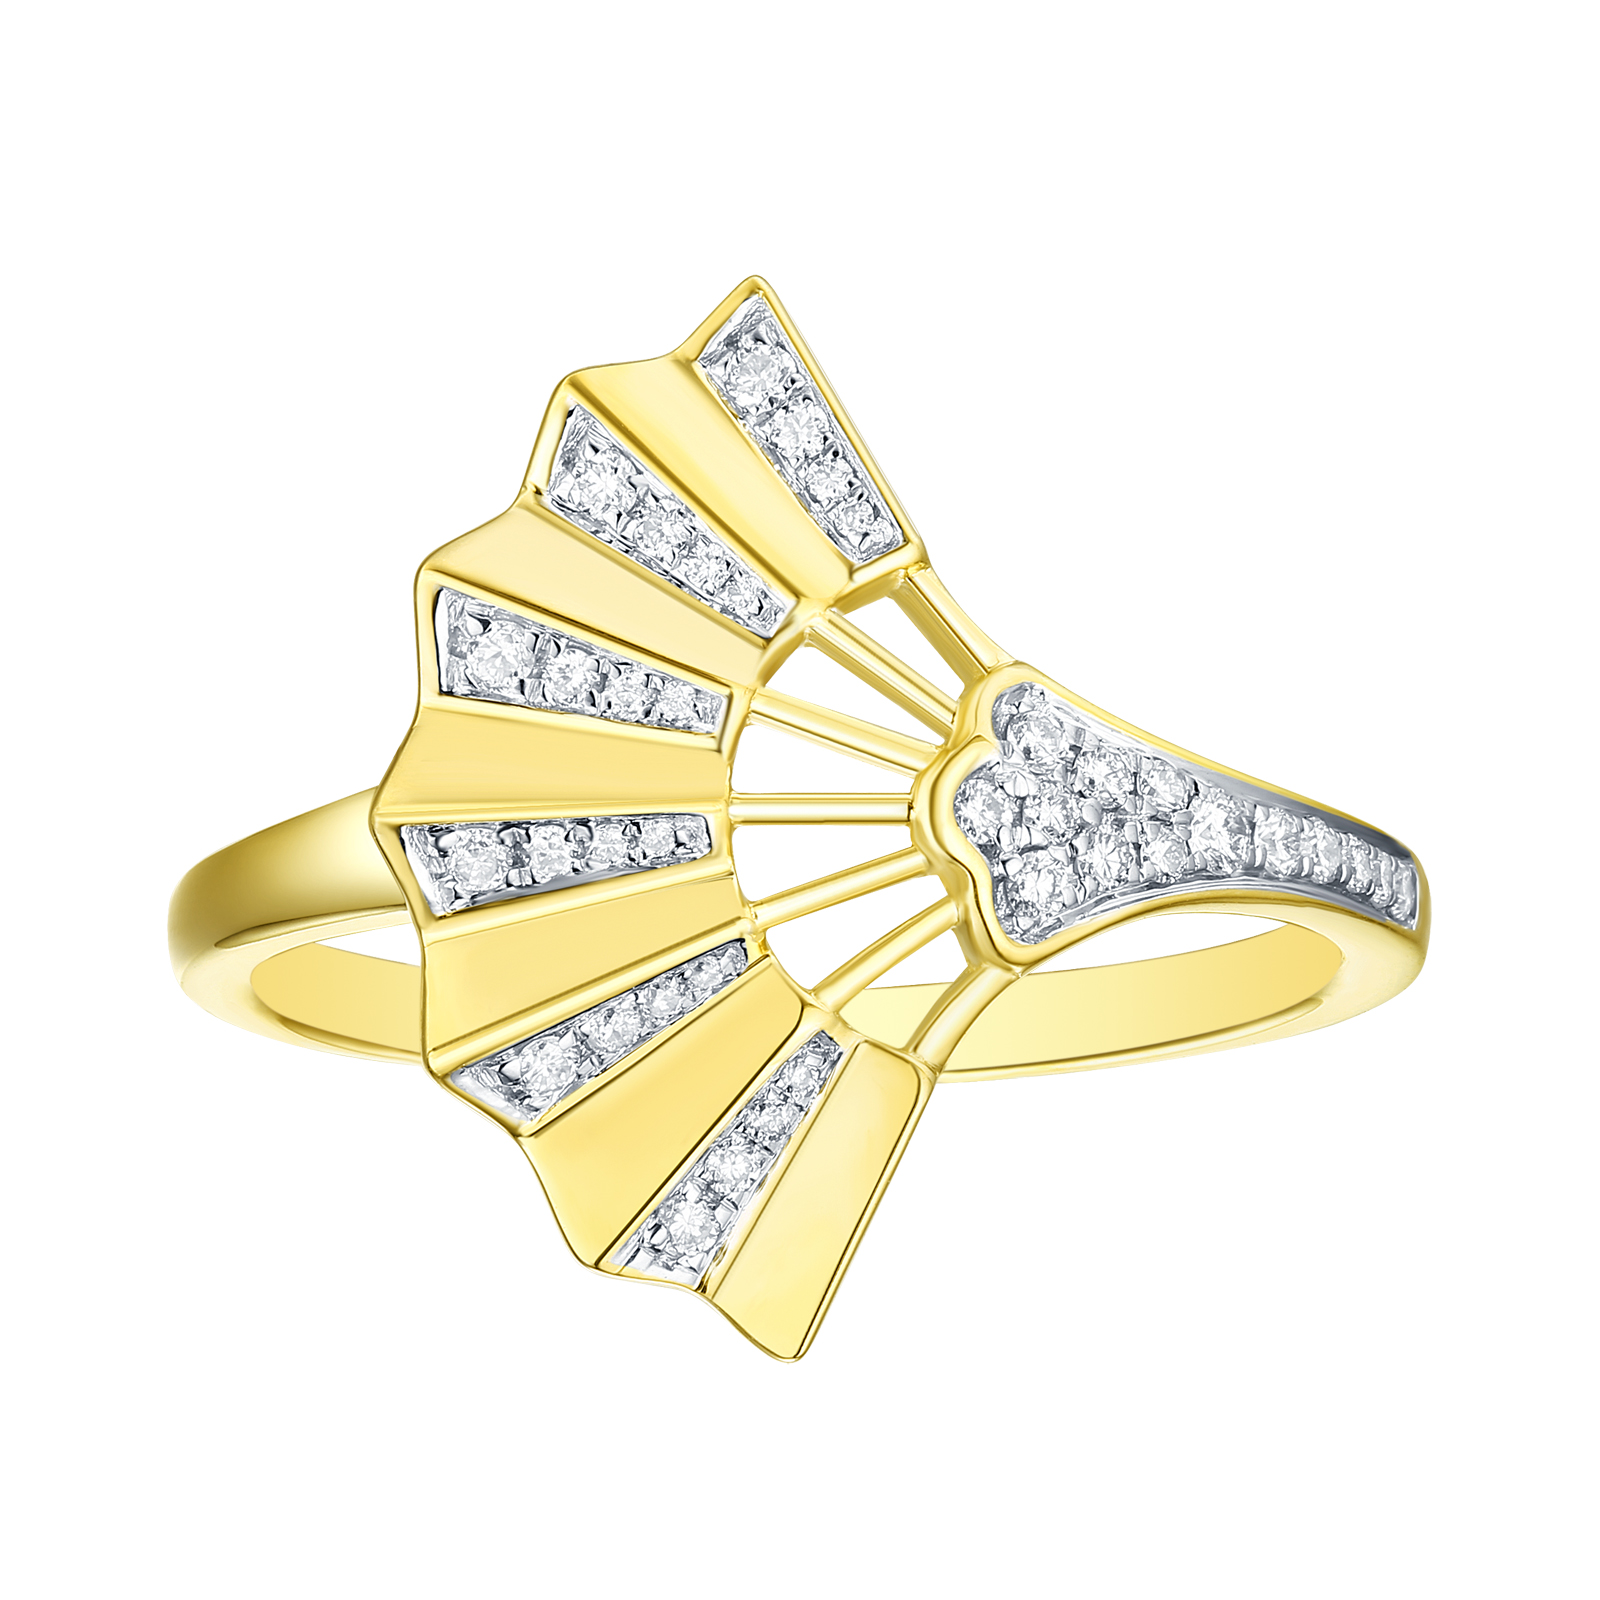 R29924WHT- 14K Yellow Gold Diamond Ring, 0.15 TCW